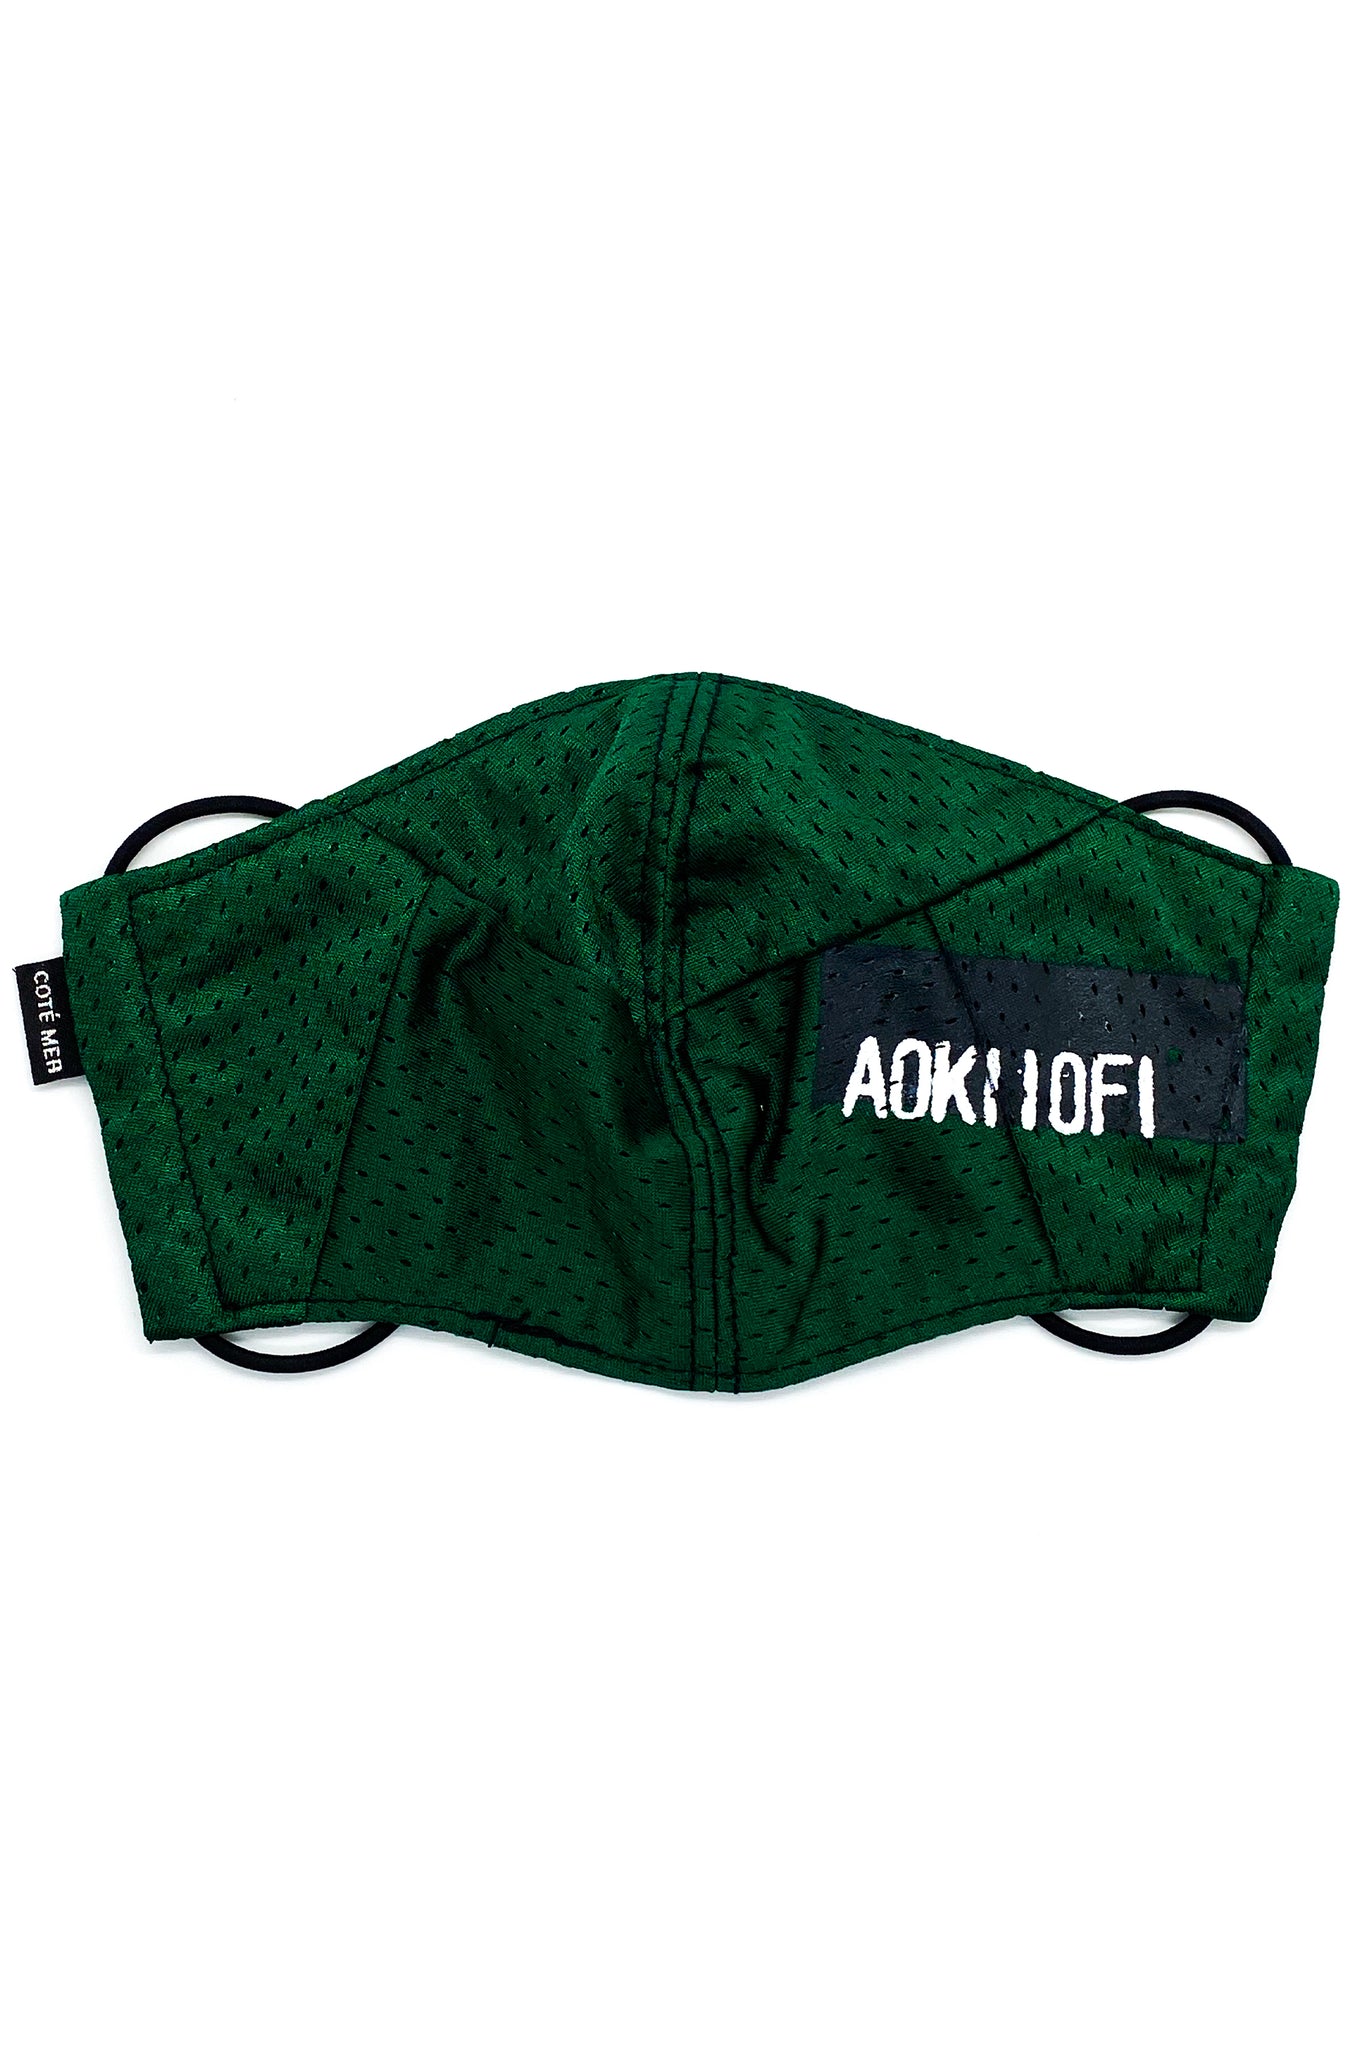 Aoki 1 of 1 Mask #385